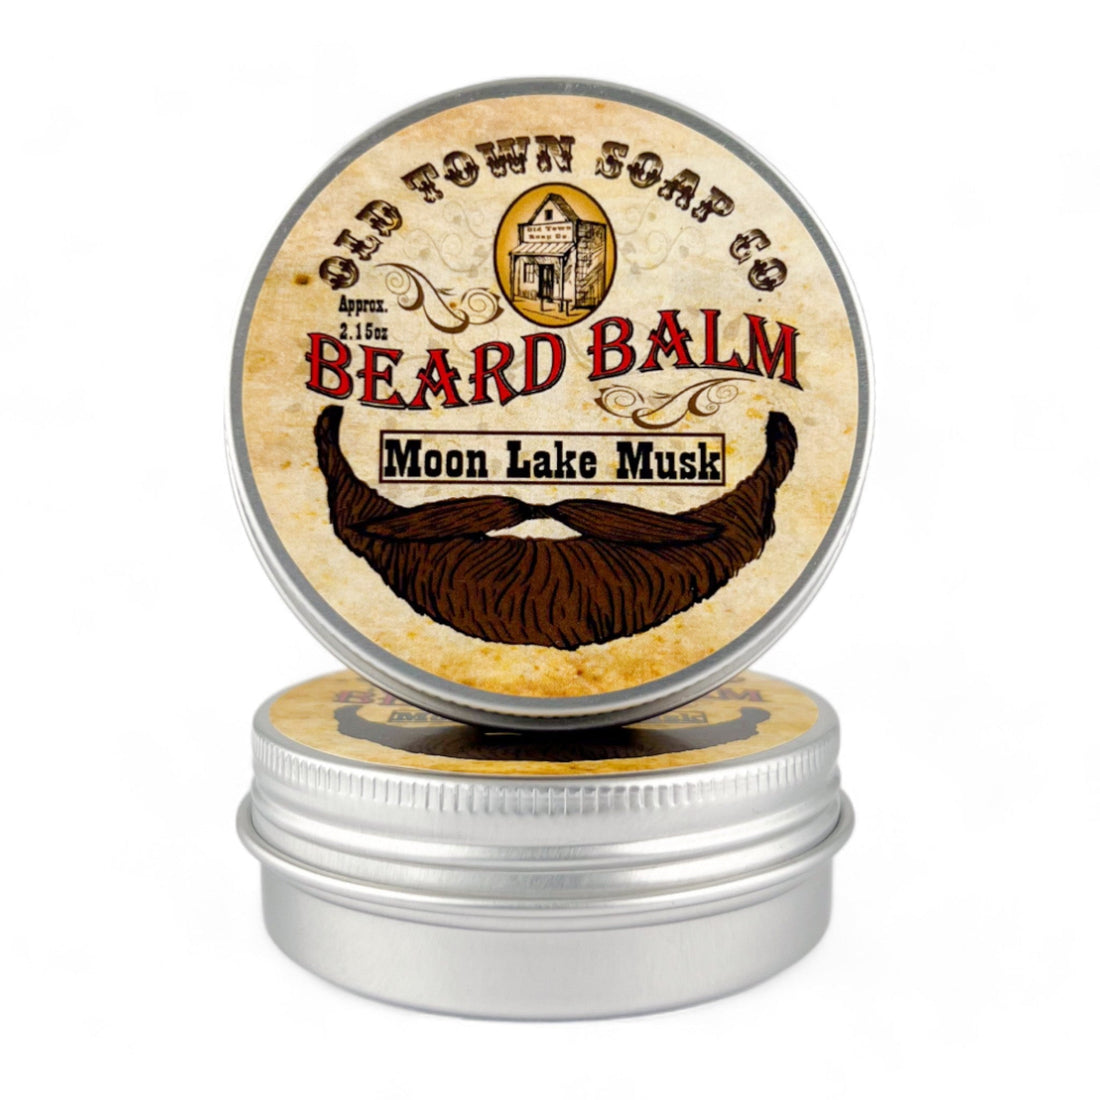 Moon Lake Musk Beard Balm - Old Town Soap Co.